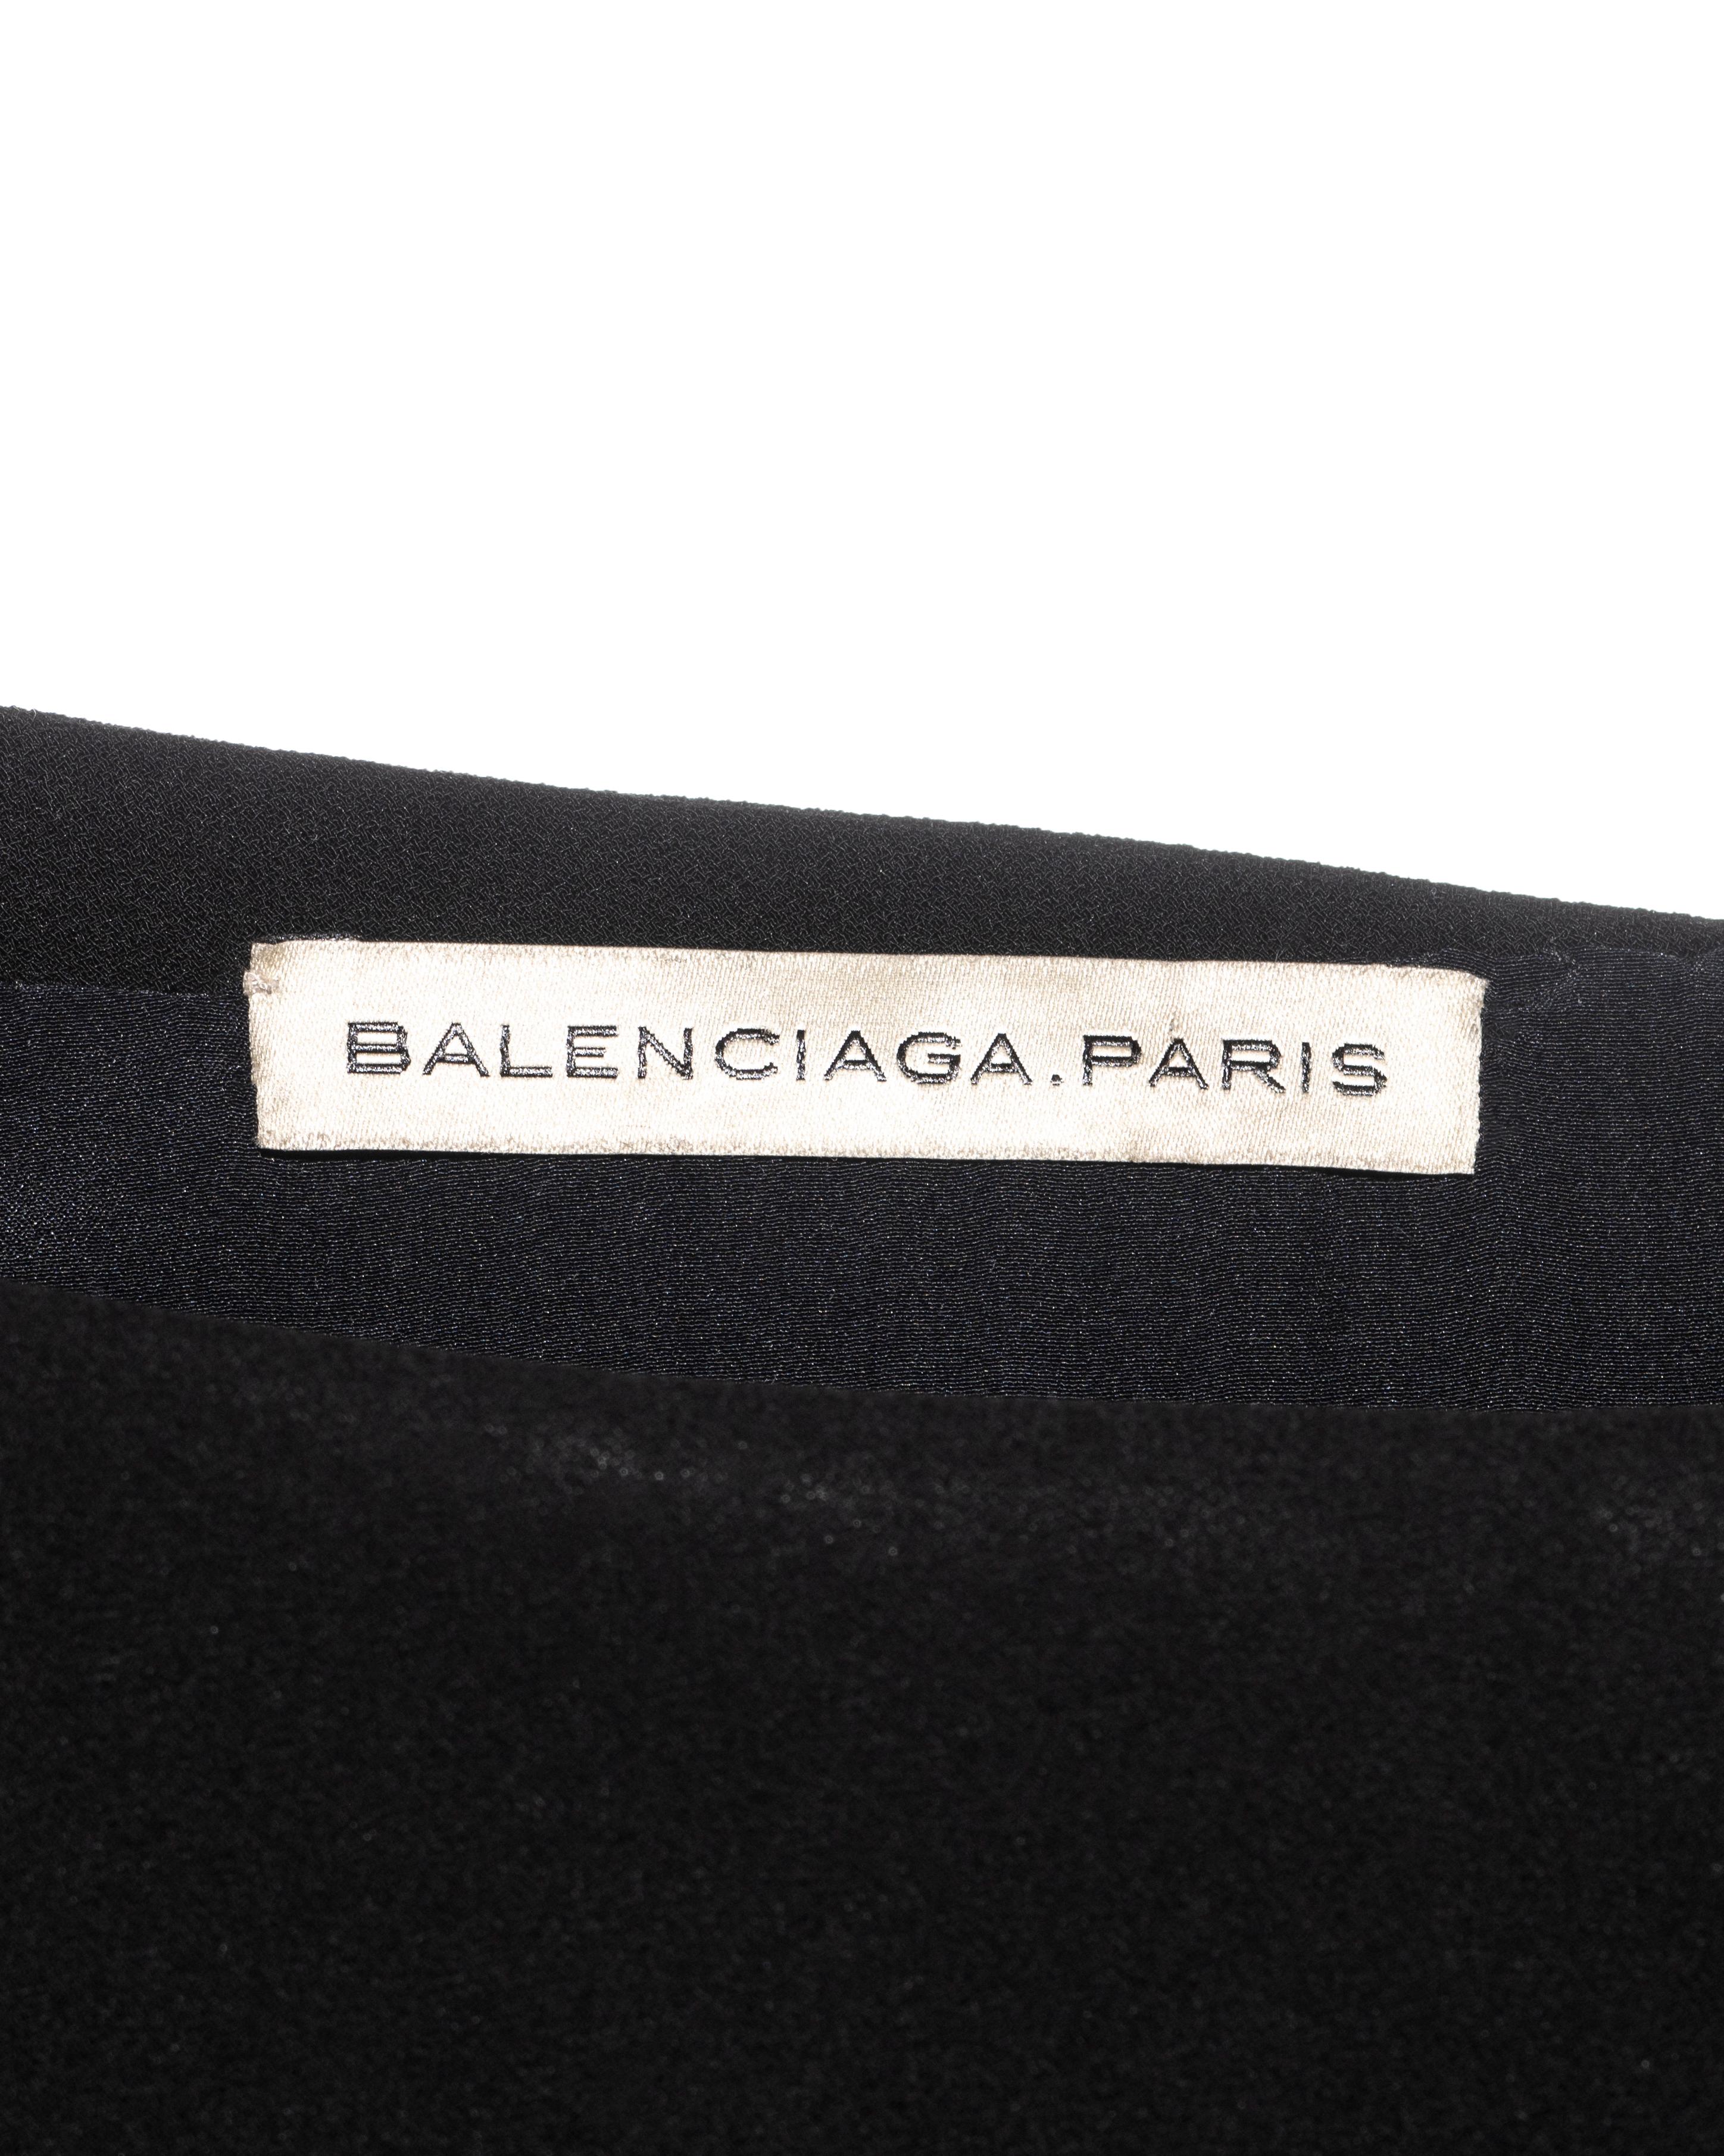 Balenciaga by Nicolas Ghesquière black structured cocktail dress, fw 2008 For Sale 3